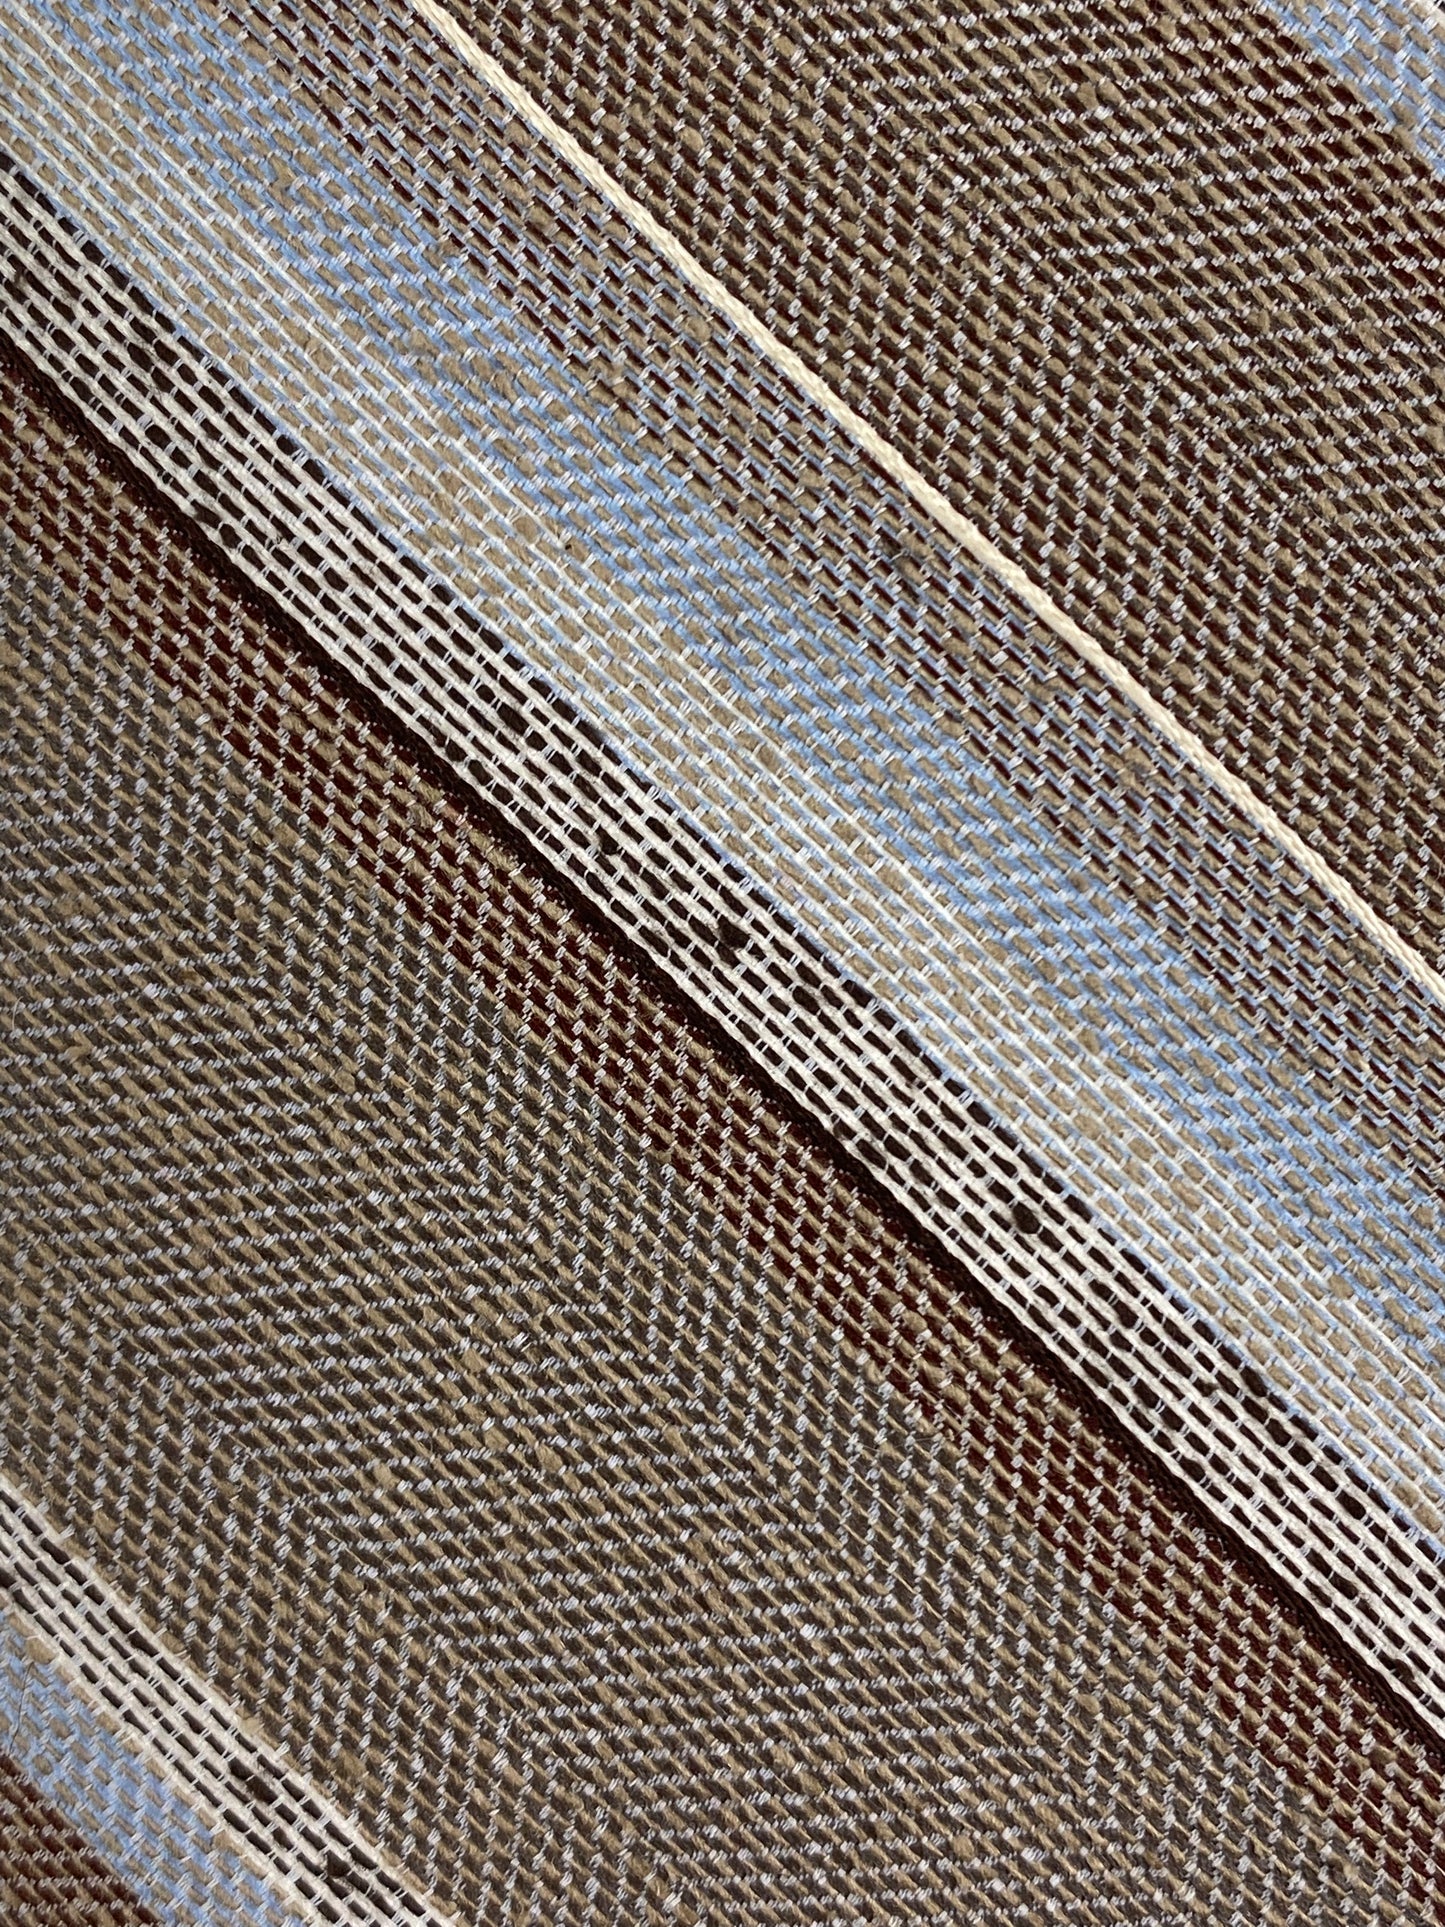 Close-up of: 80s Deadstock Necktie, Men's Vintage Brown Blue Diagonal Stripe Tie, NOS